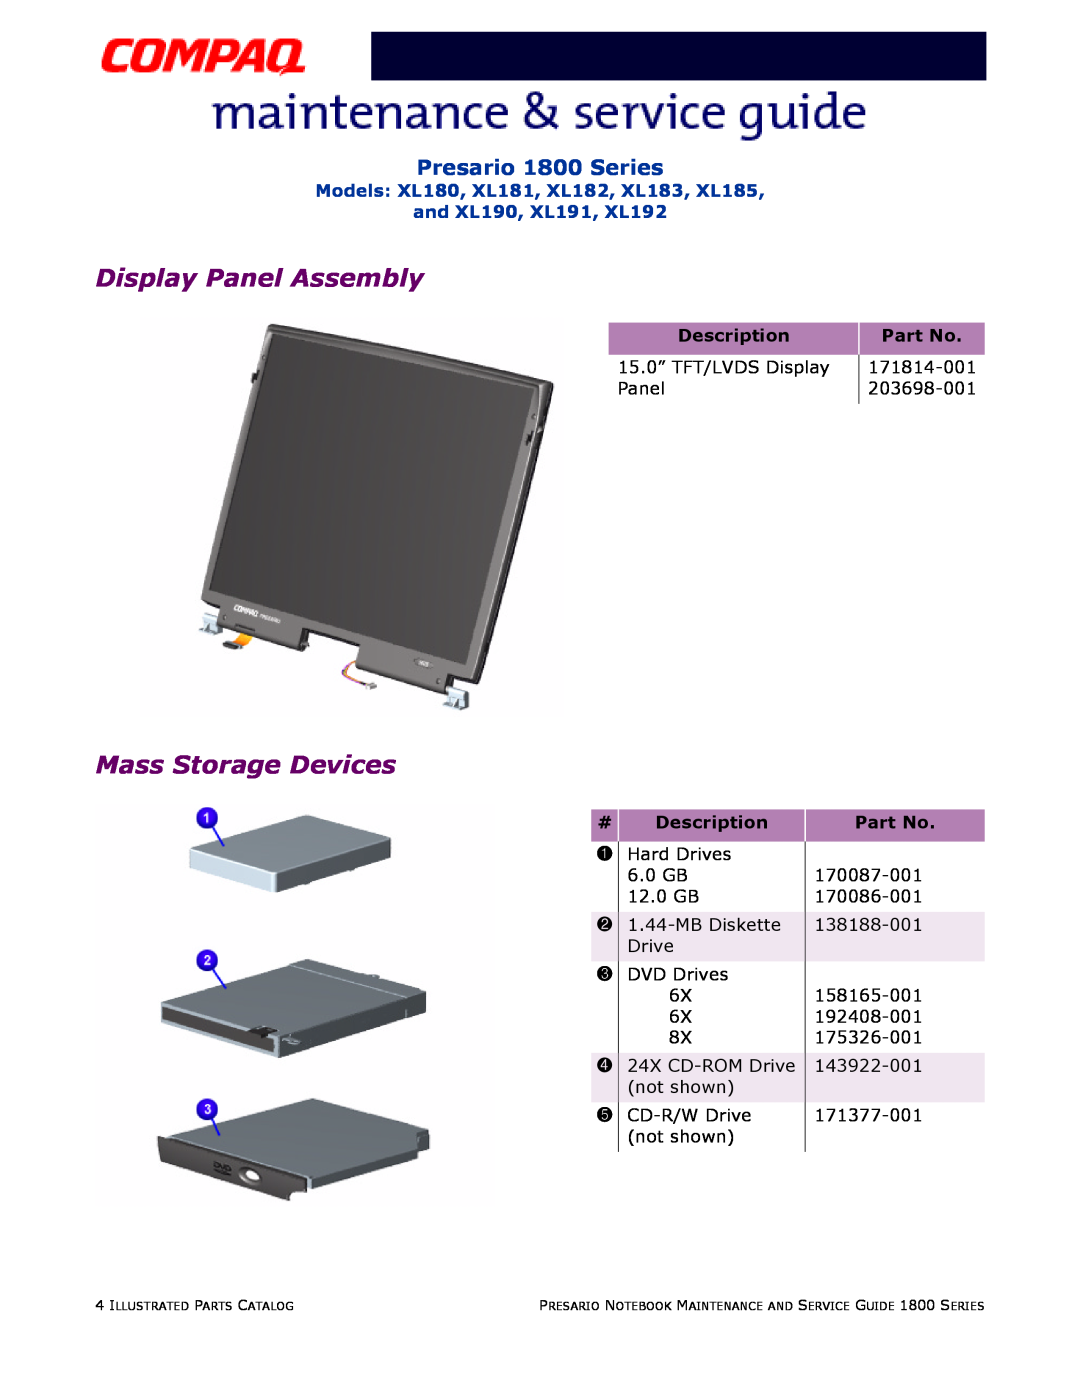 Compaq XL180, XL190, XL191, XL192, XL183 Display Panel Assembly, Mass Storage Devices, Presario 1800 Series, Description 